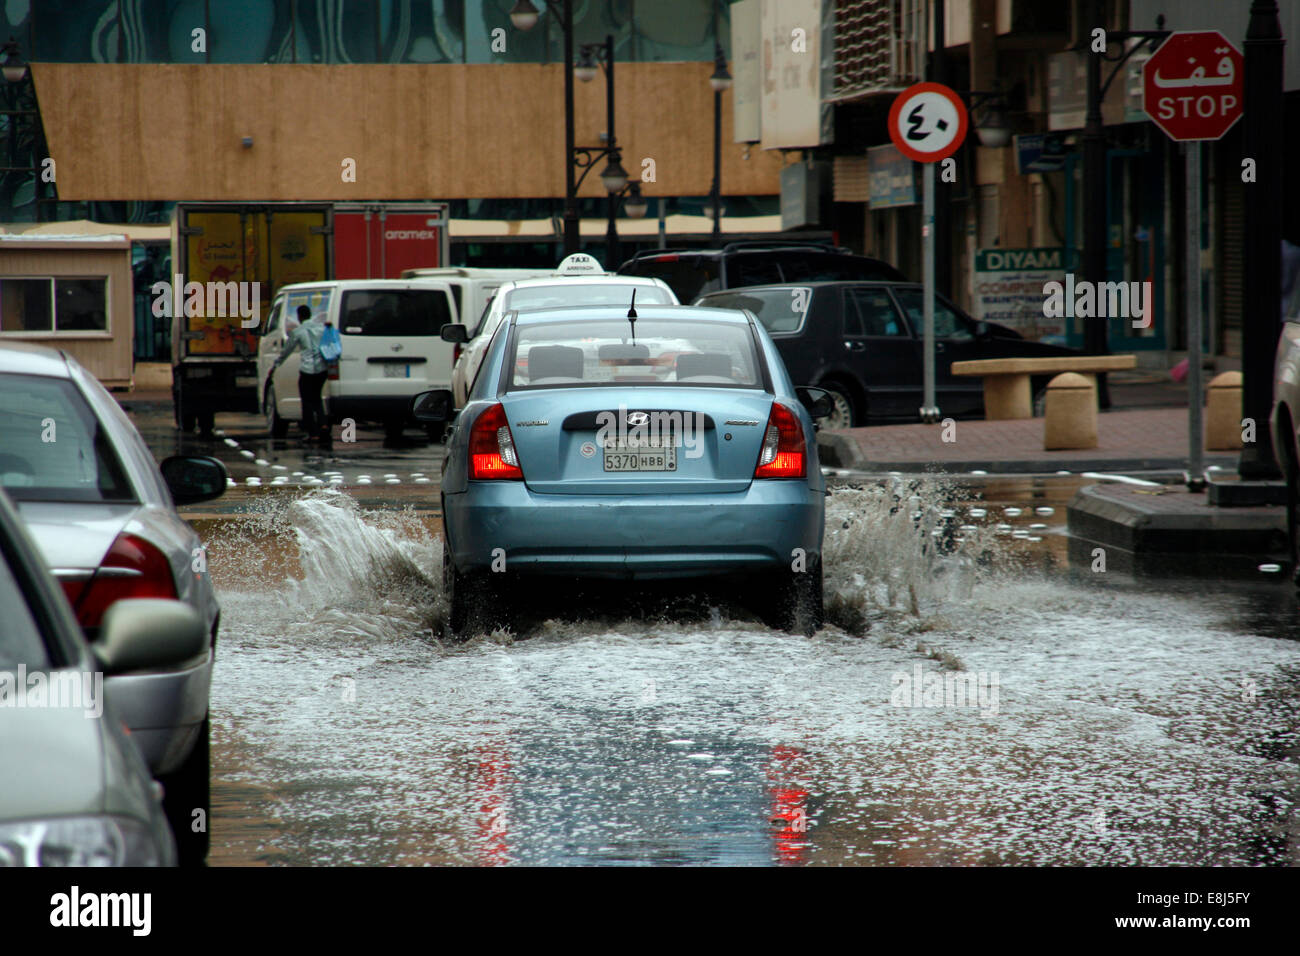 A car drives through the built-up rain water in the streets of Riyadh, Saudi Arabia Stock Photo